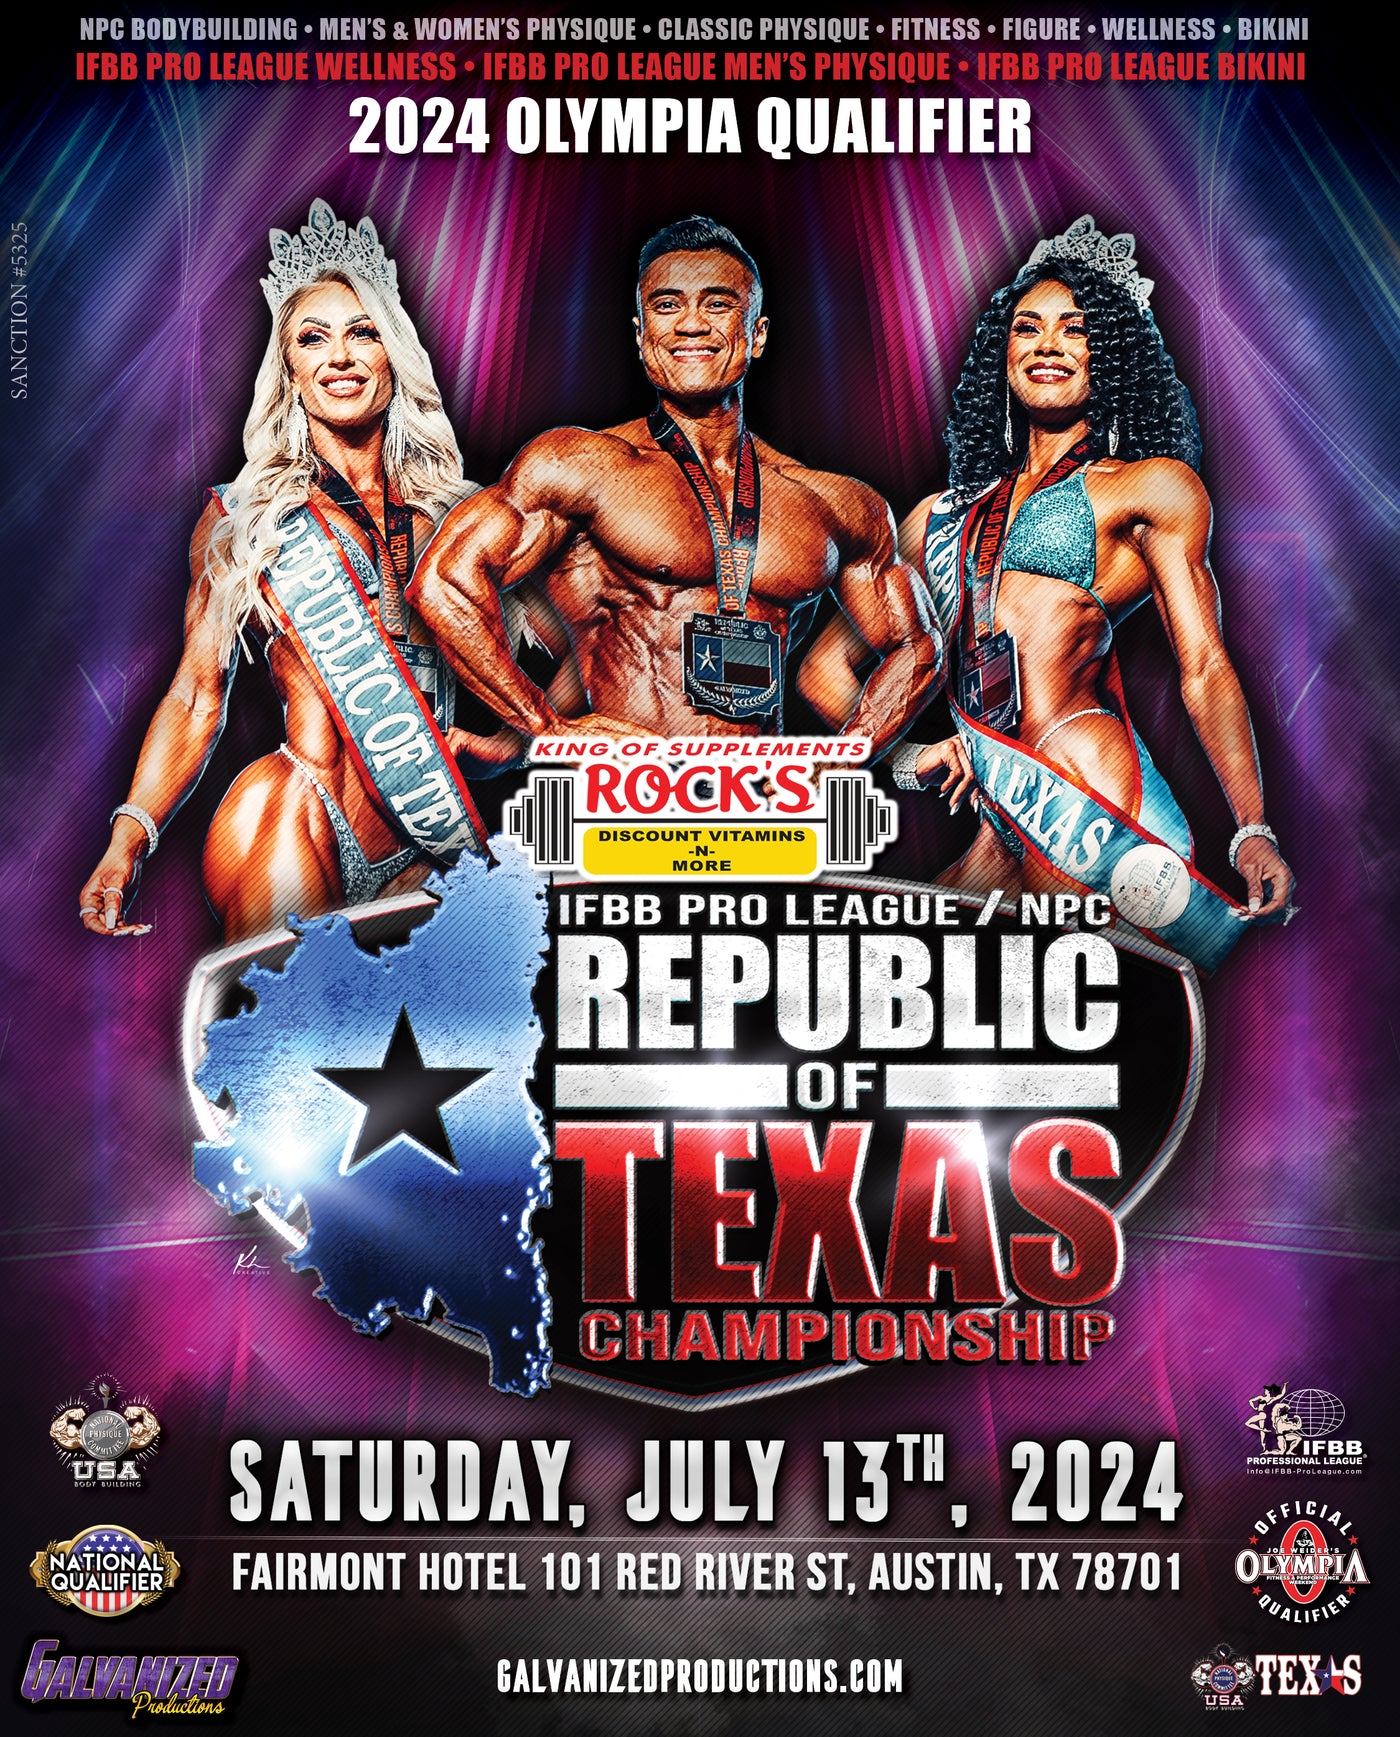 IFBB Pro League/NPC Republic of Texas Championships